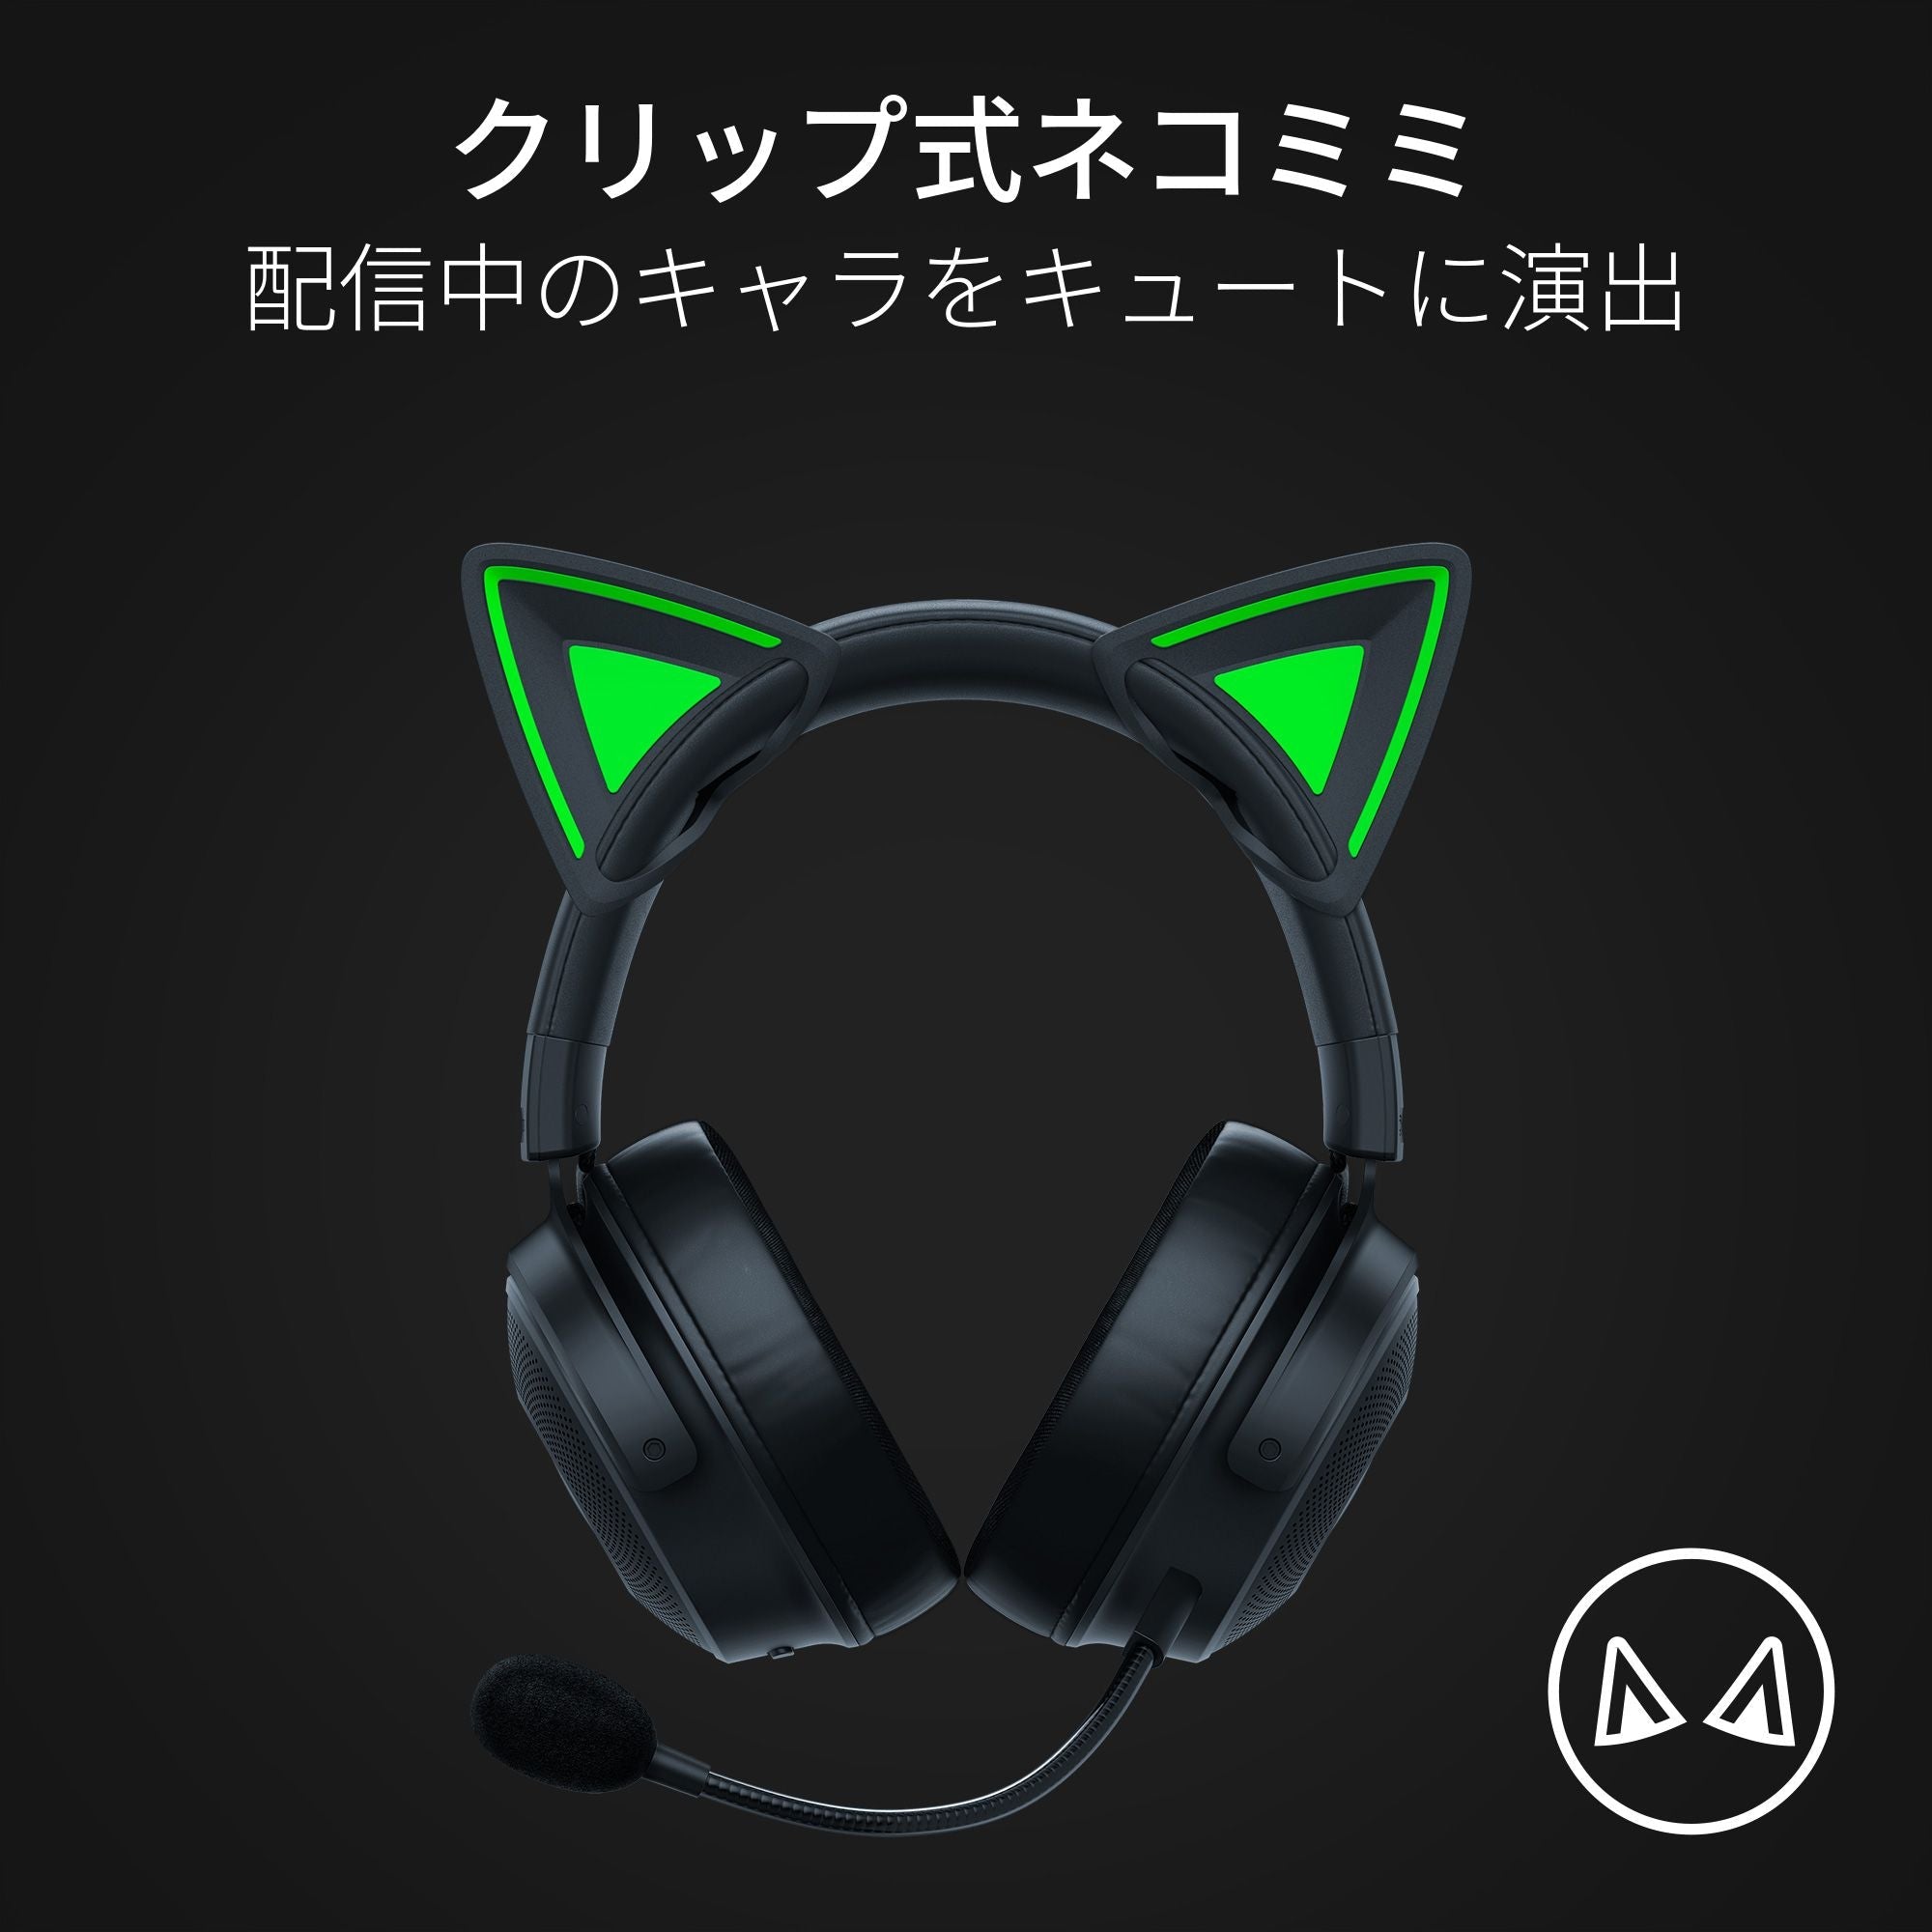 Razer Kitty Ears V2  キティー イヤーズ ブイツー thumbnail 2